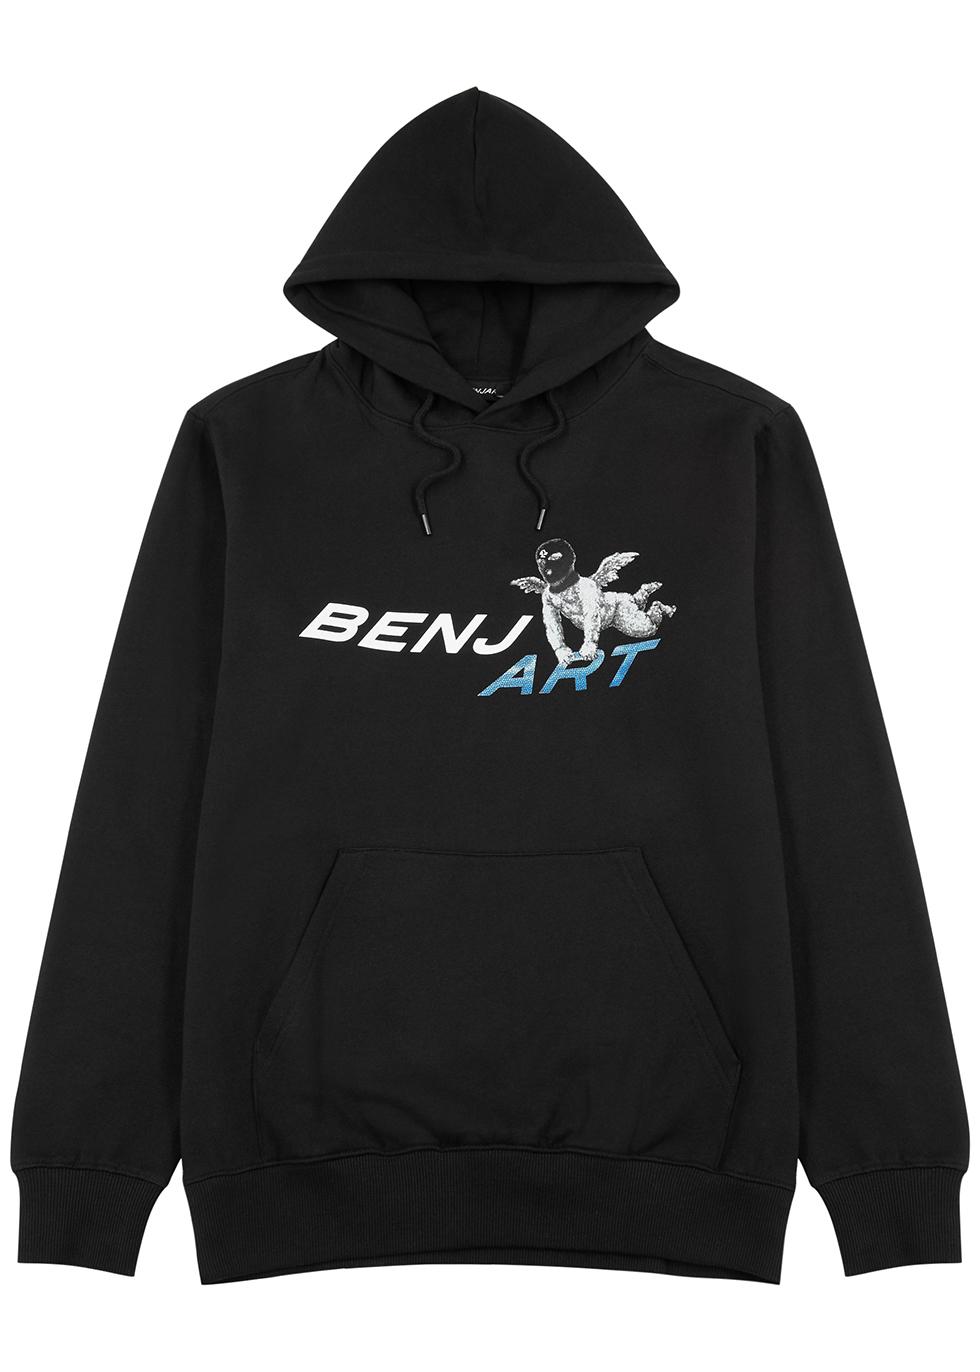 Cherub hoodied cotton-blend sweatshirt by BENJART